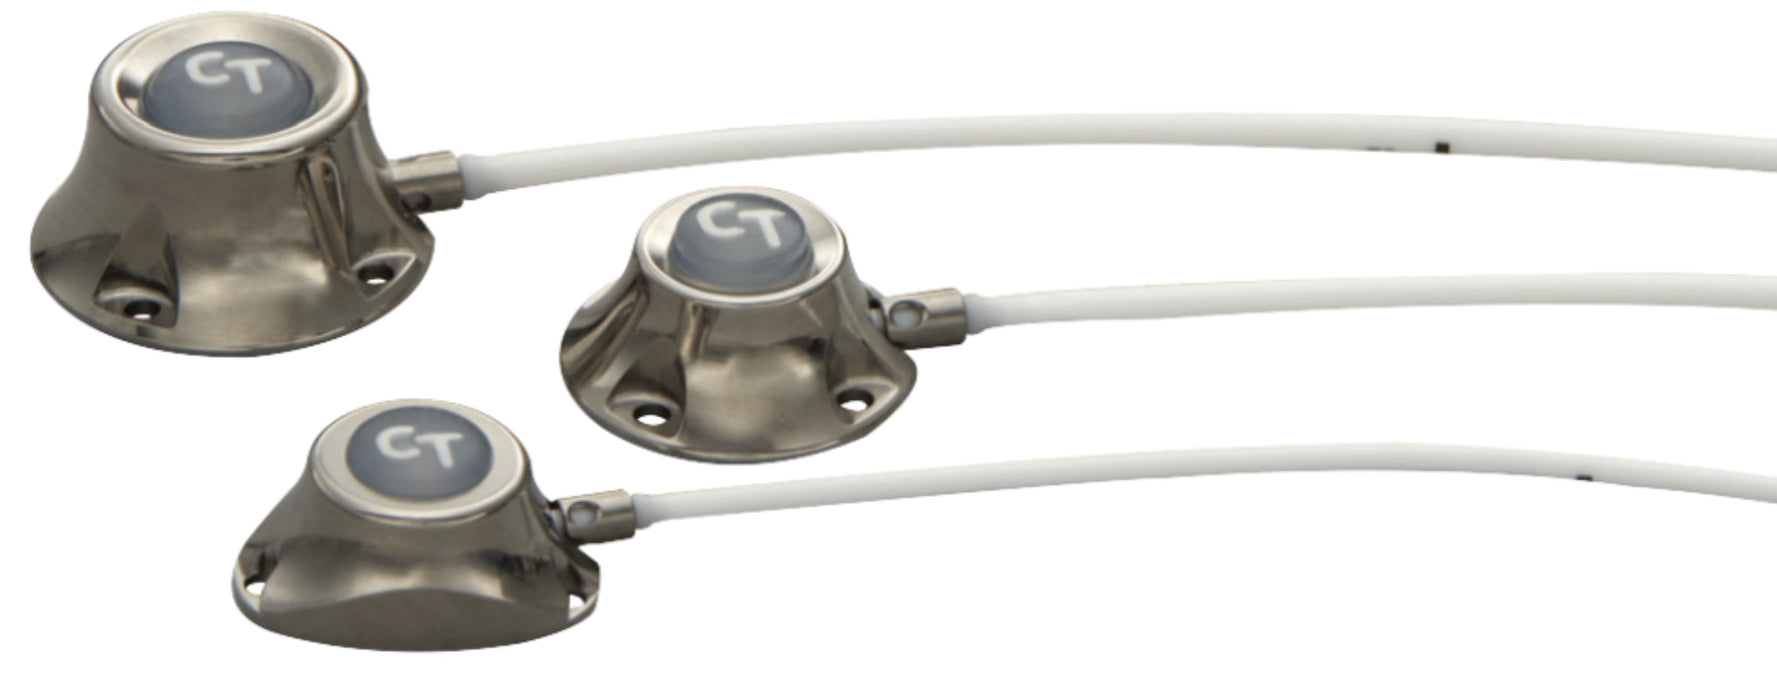 Port-A-Cath Power P.A.C Implantable Vascular Access System Kit w/ Titanium Contoured Single Lumen Portal, 8.5Fr, 1.6mm ID x 2.6mm OD Catheter